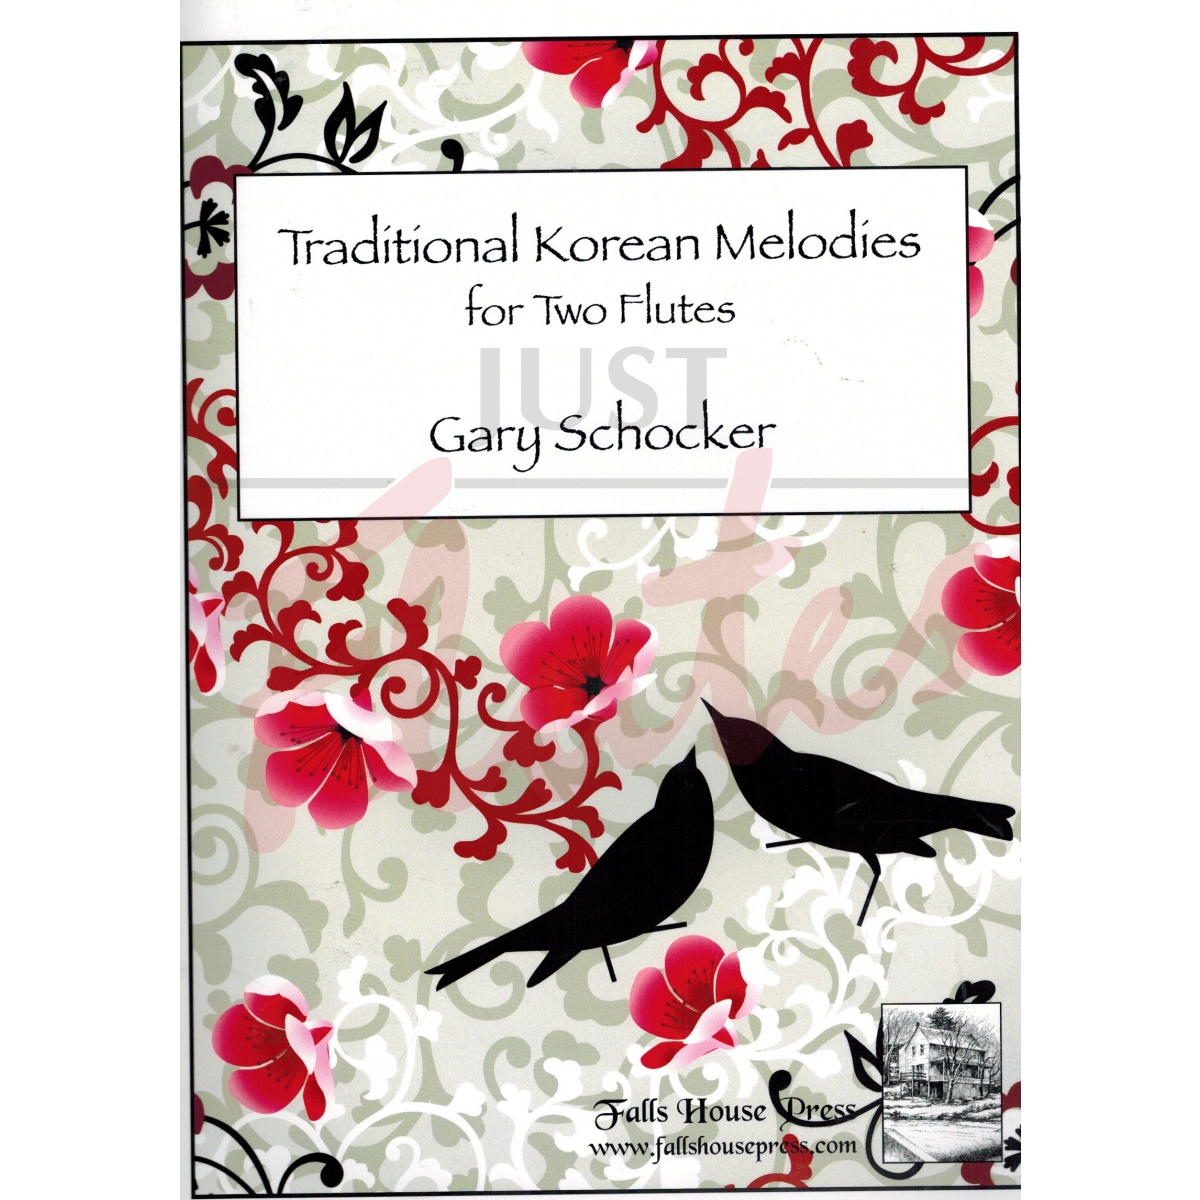 Traditional Korean Melodies